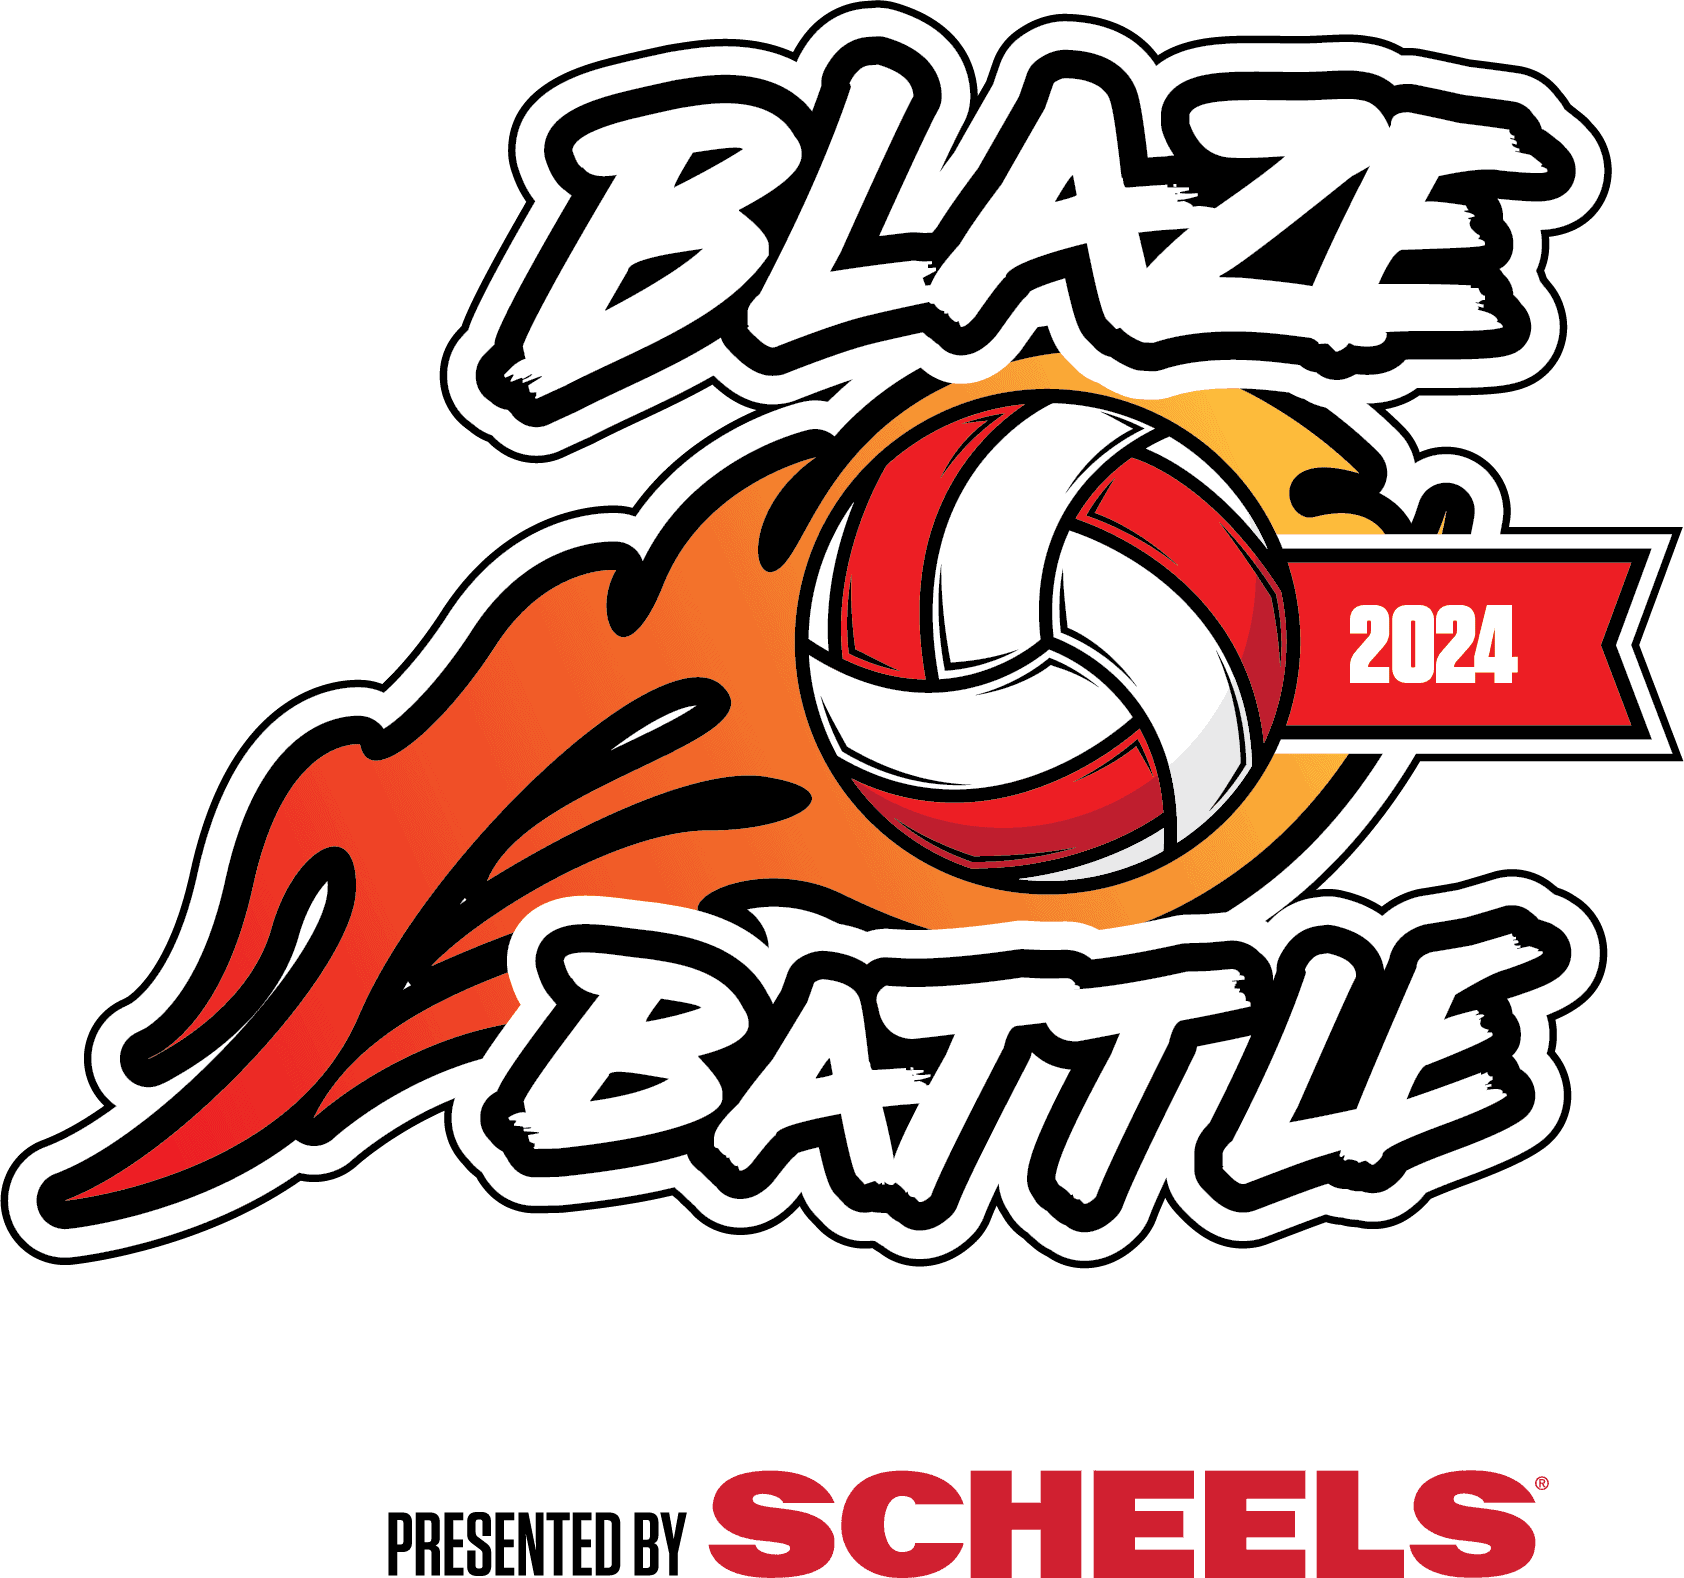 blaze battle logo 2024